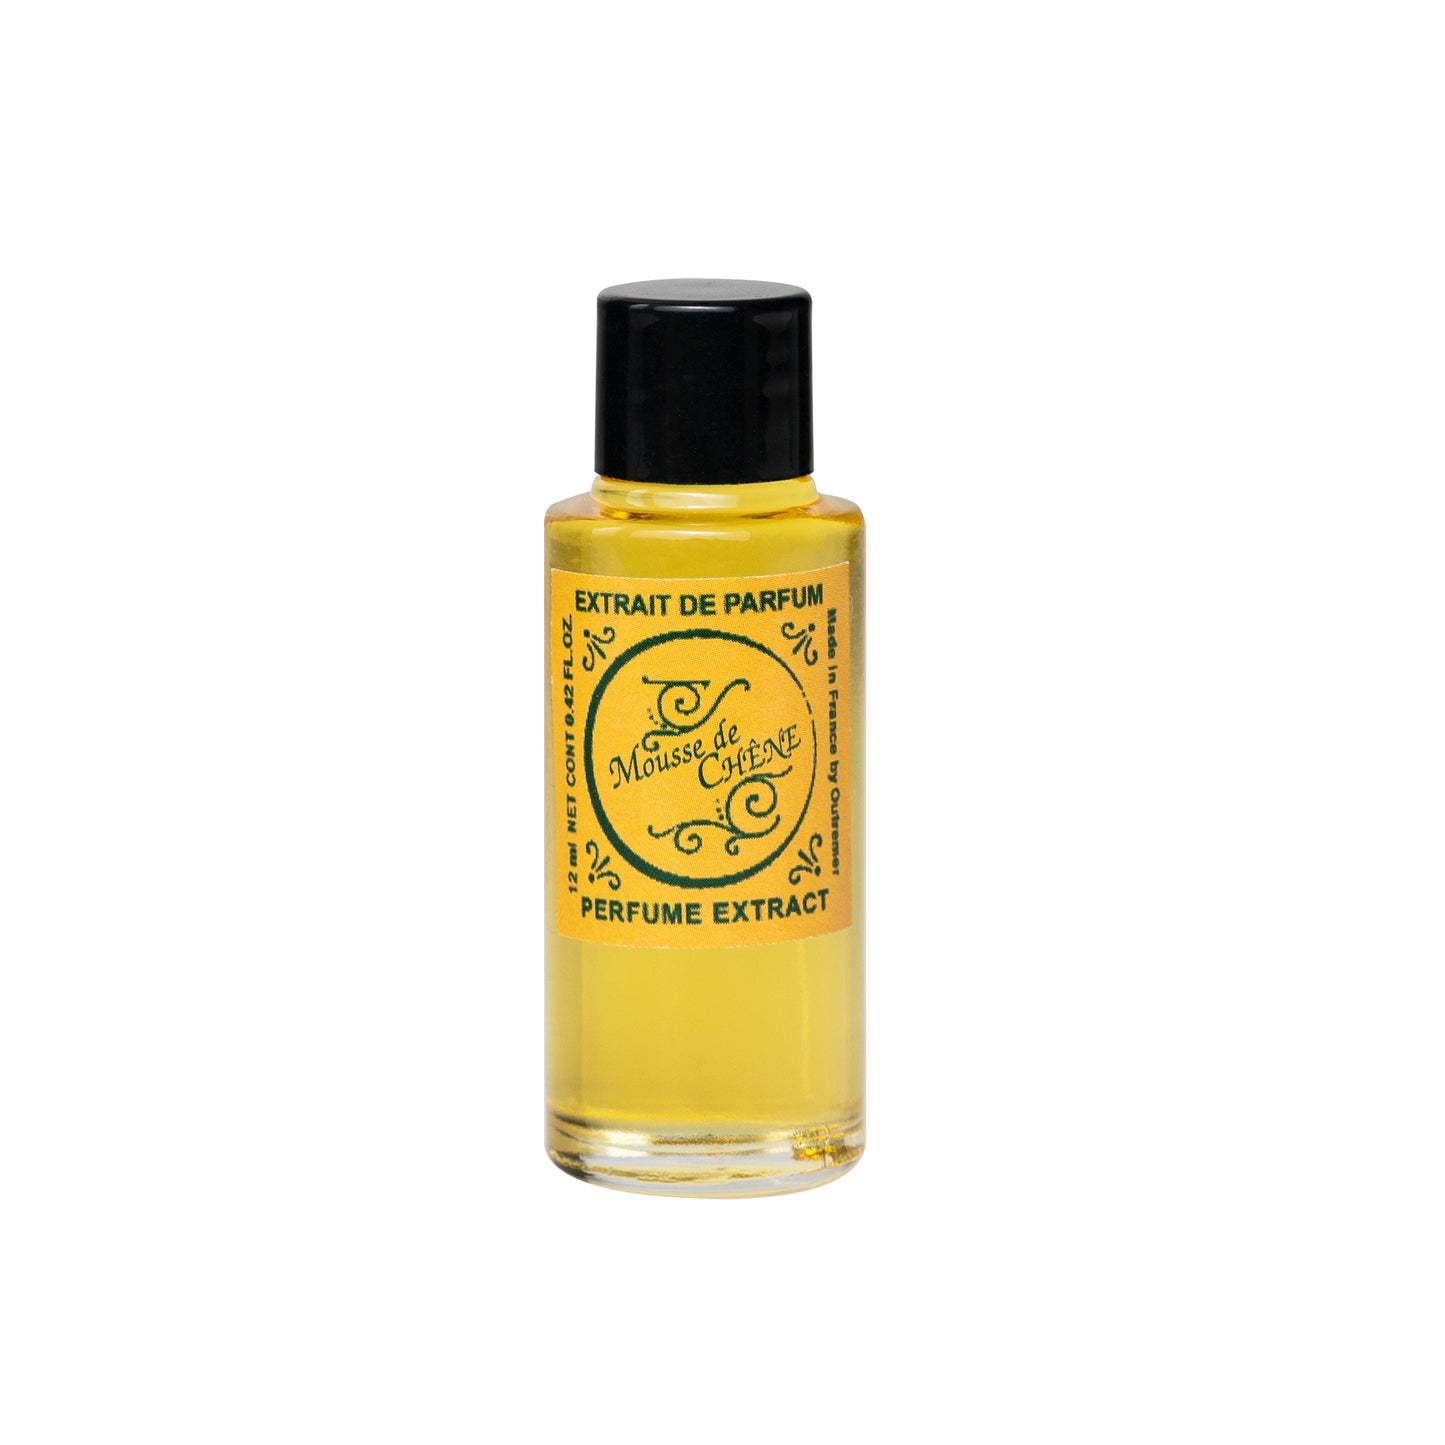 Primary image of Mousse De Chene Perfume Extract